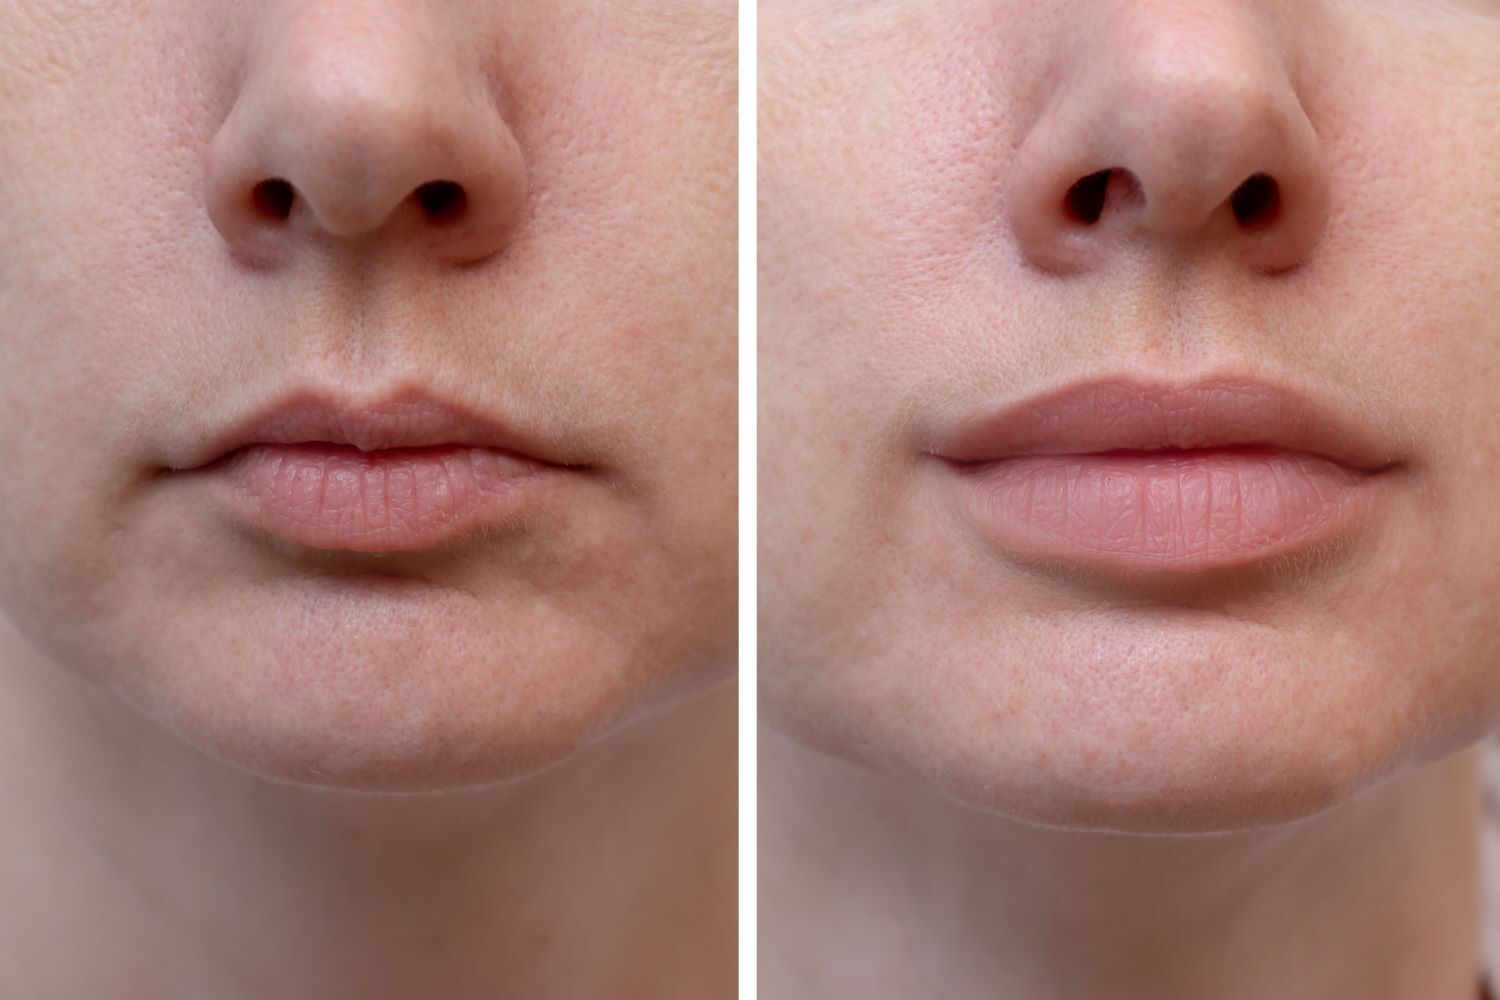 Fuller lips with dermal fillers